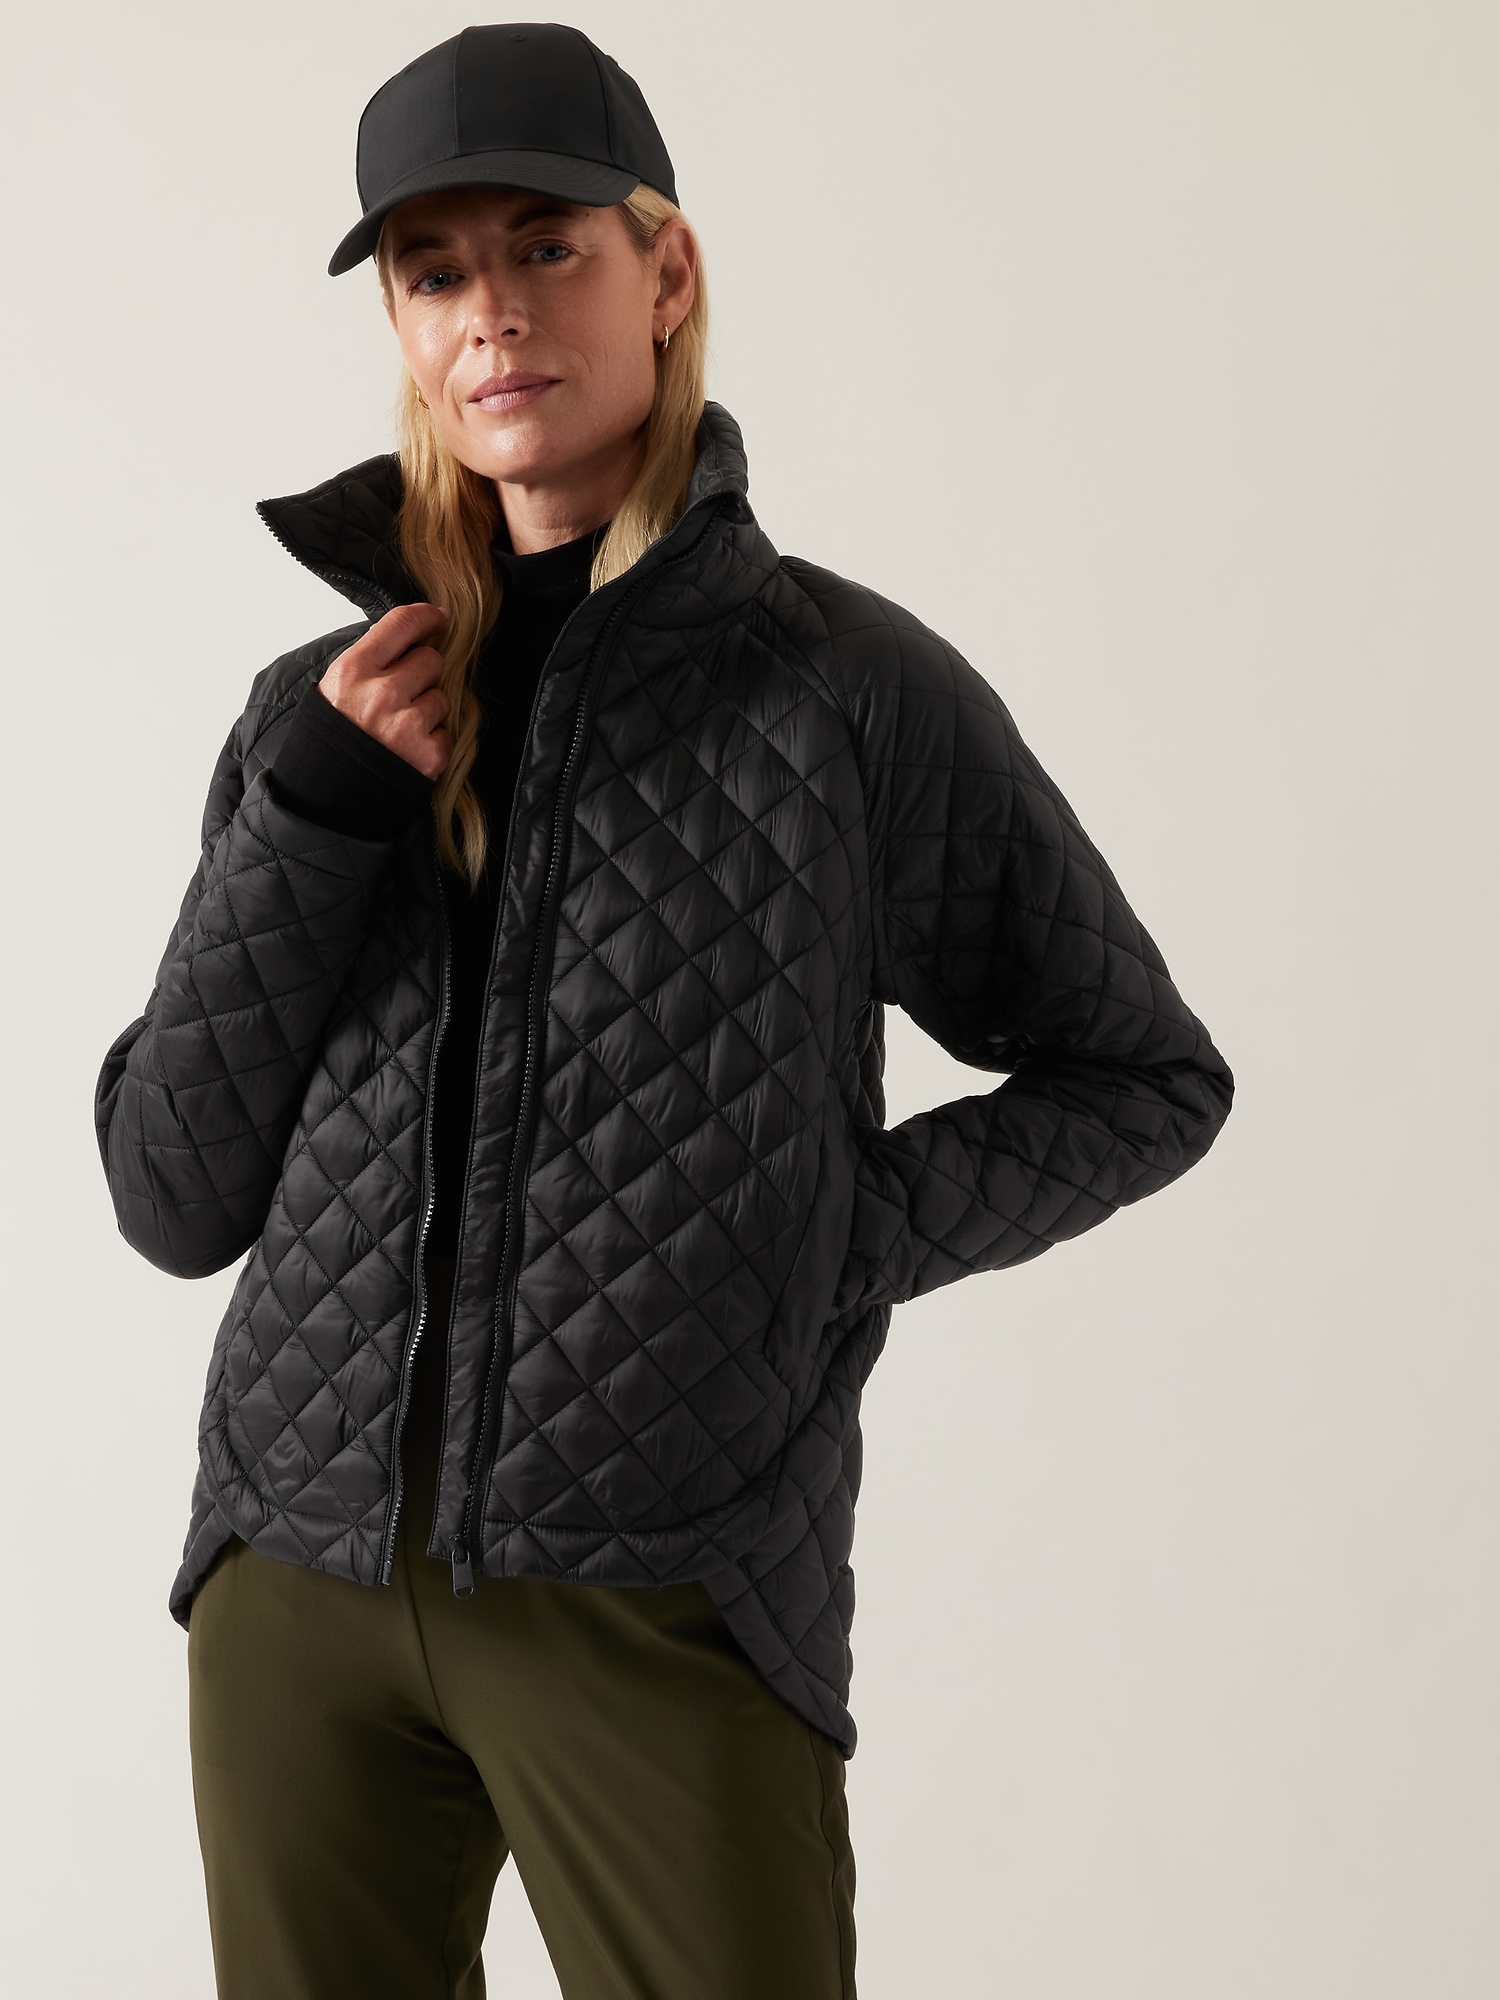 Tangerine Women's Petite XL Lightweight Athletic Jacket Coat Grey & Soft…  Size undefined - $19 - From Lynn